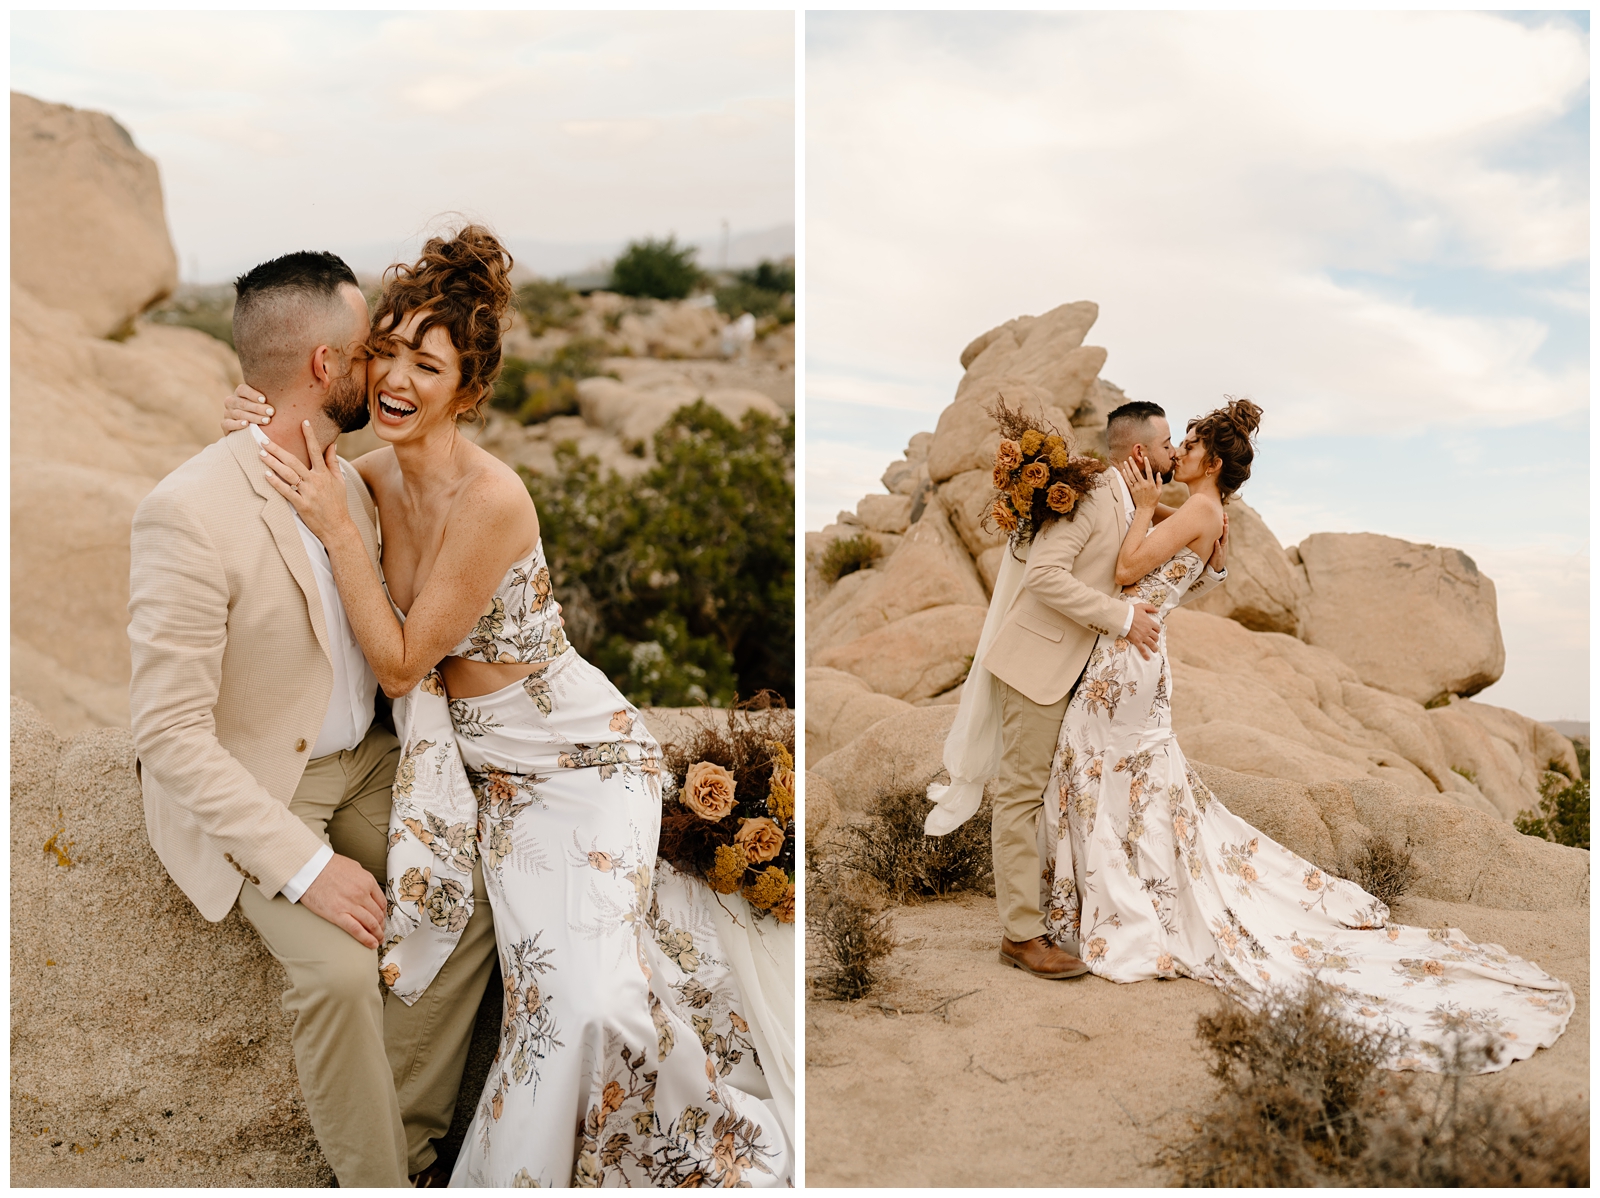 Fun and dramatic newlywed bridal portraits in Joshua Tree California by travel elopement photographer Kayli LaFon Photography